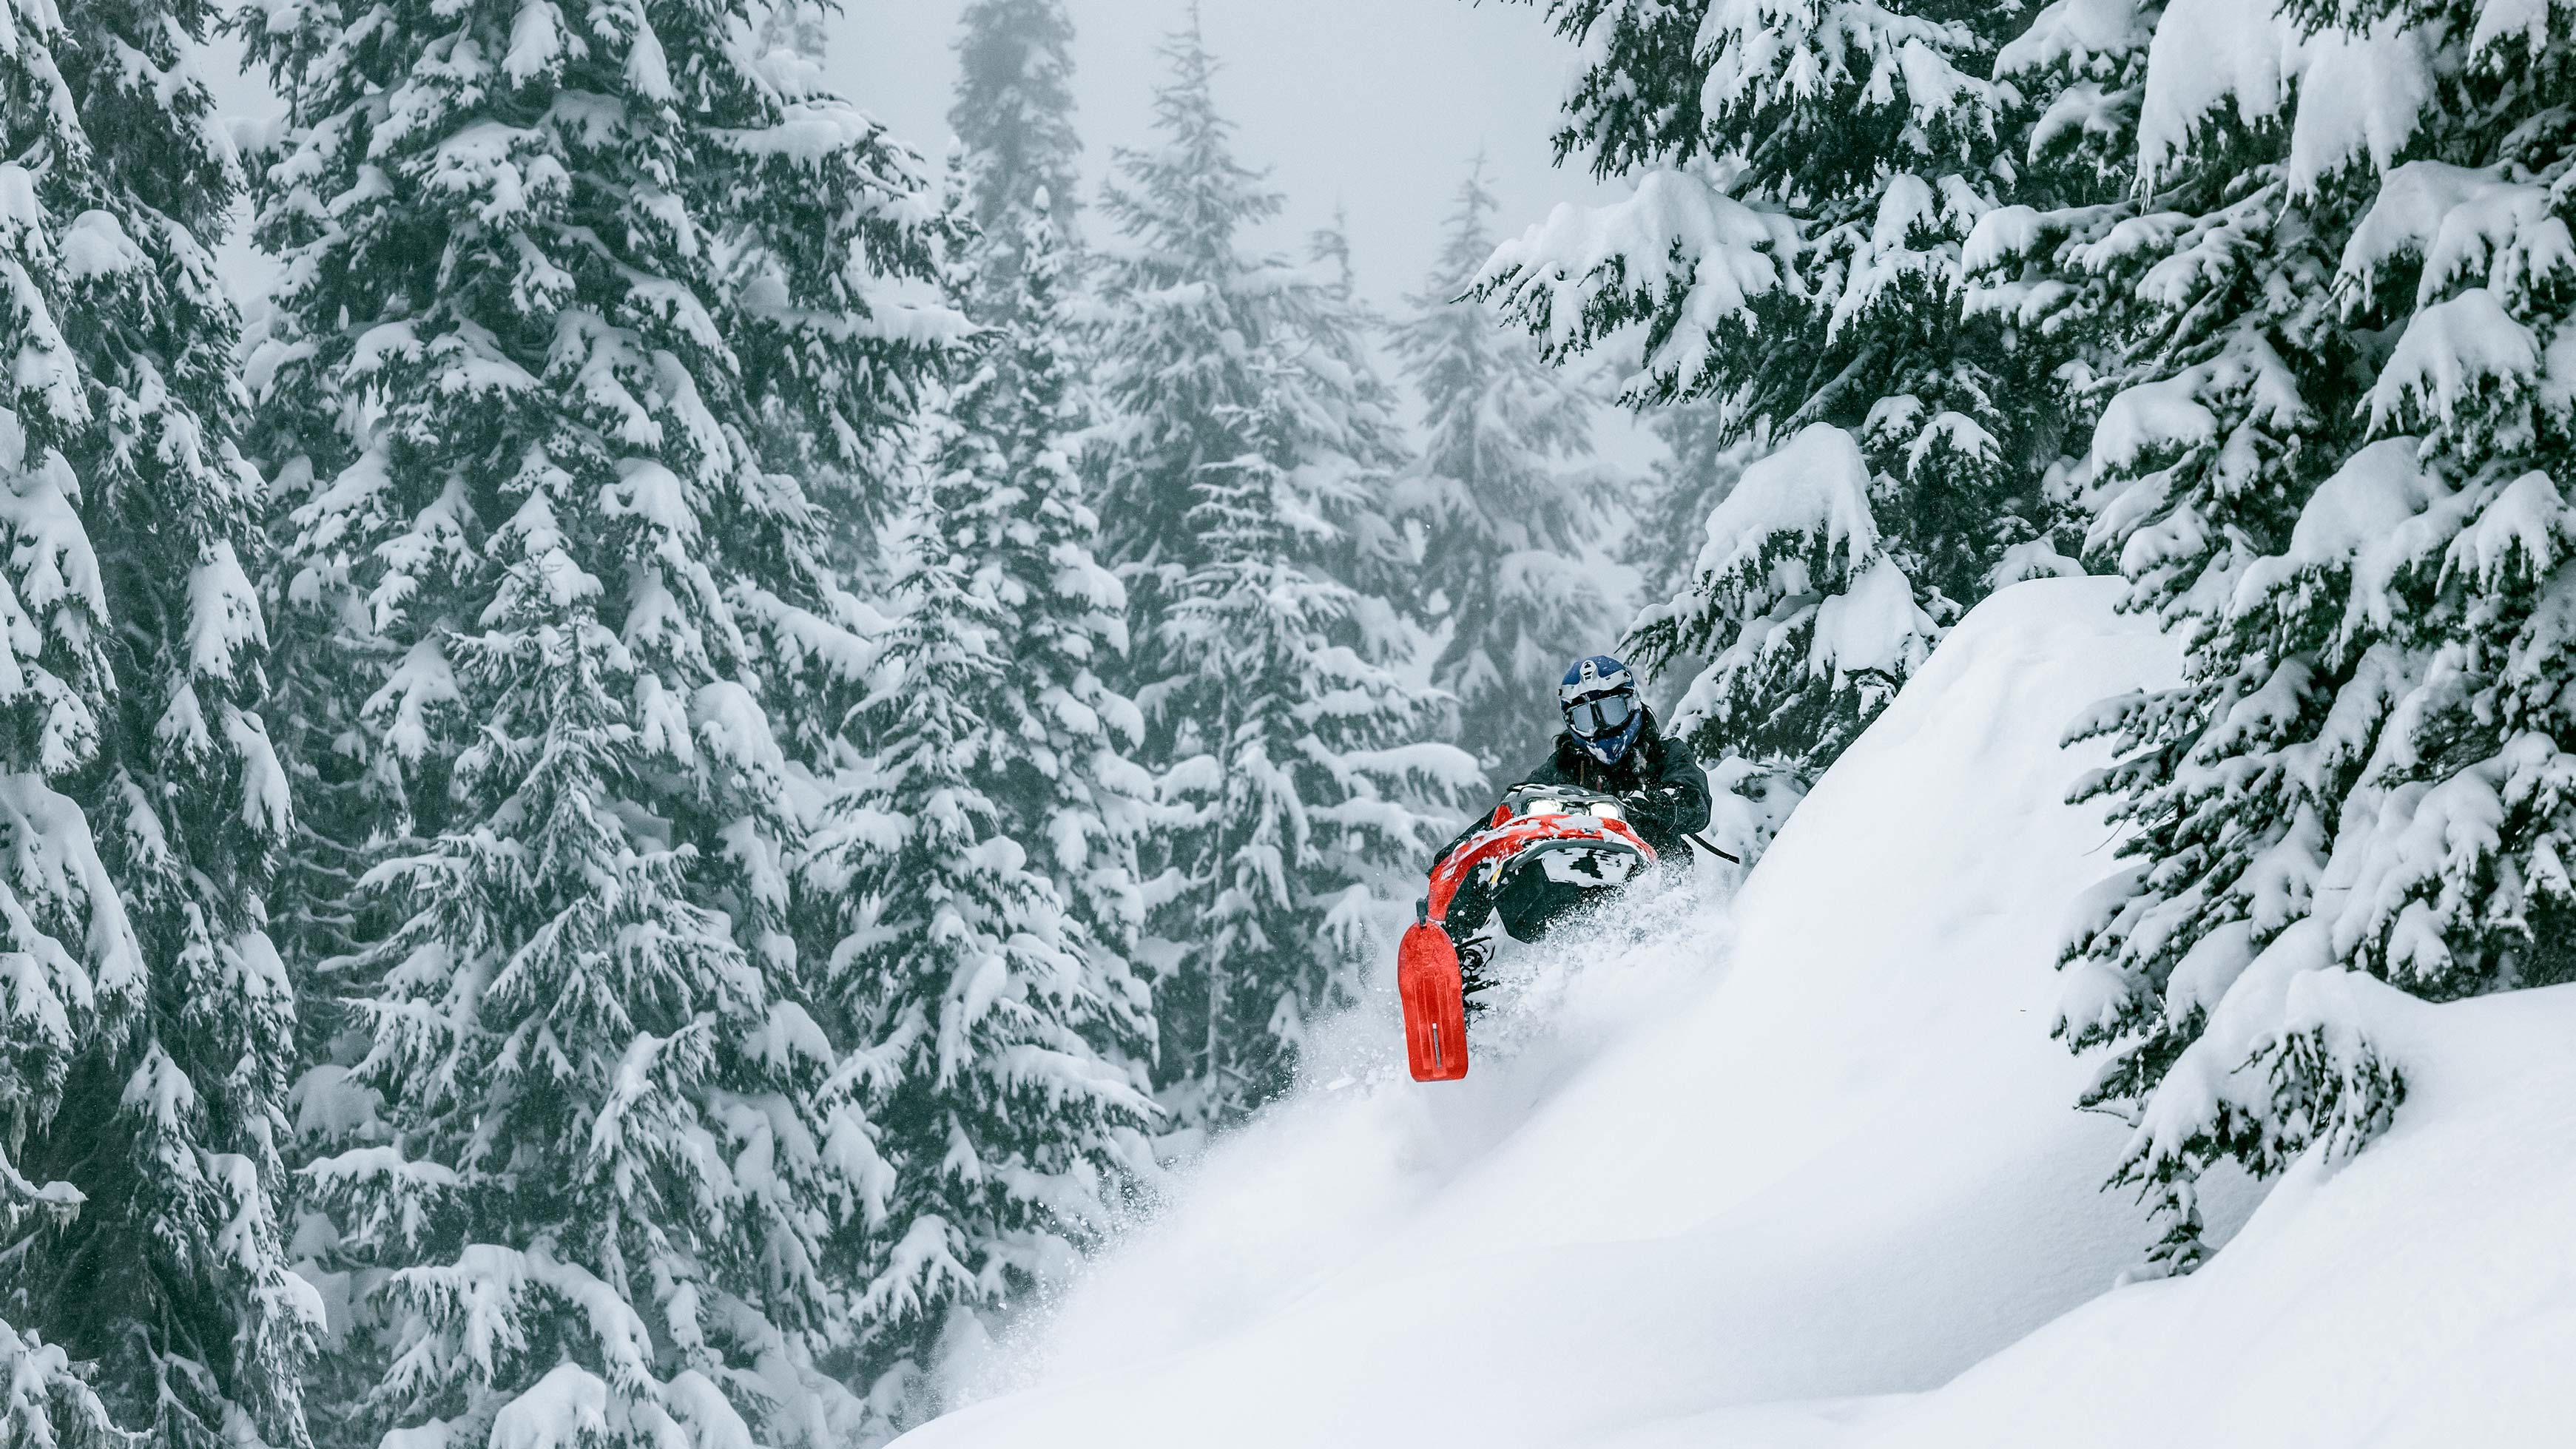 Jason Ribi riding a Lynx snowmobile in mountain